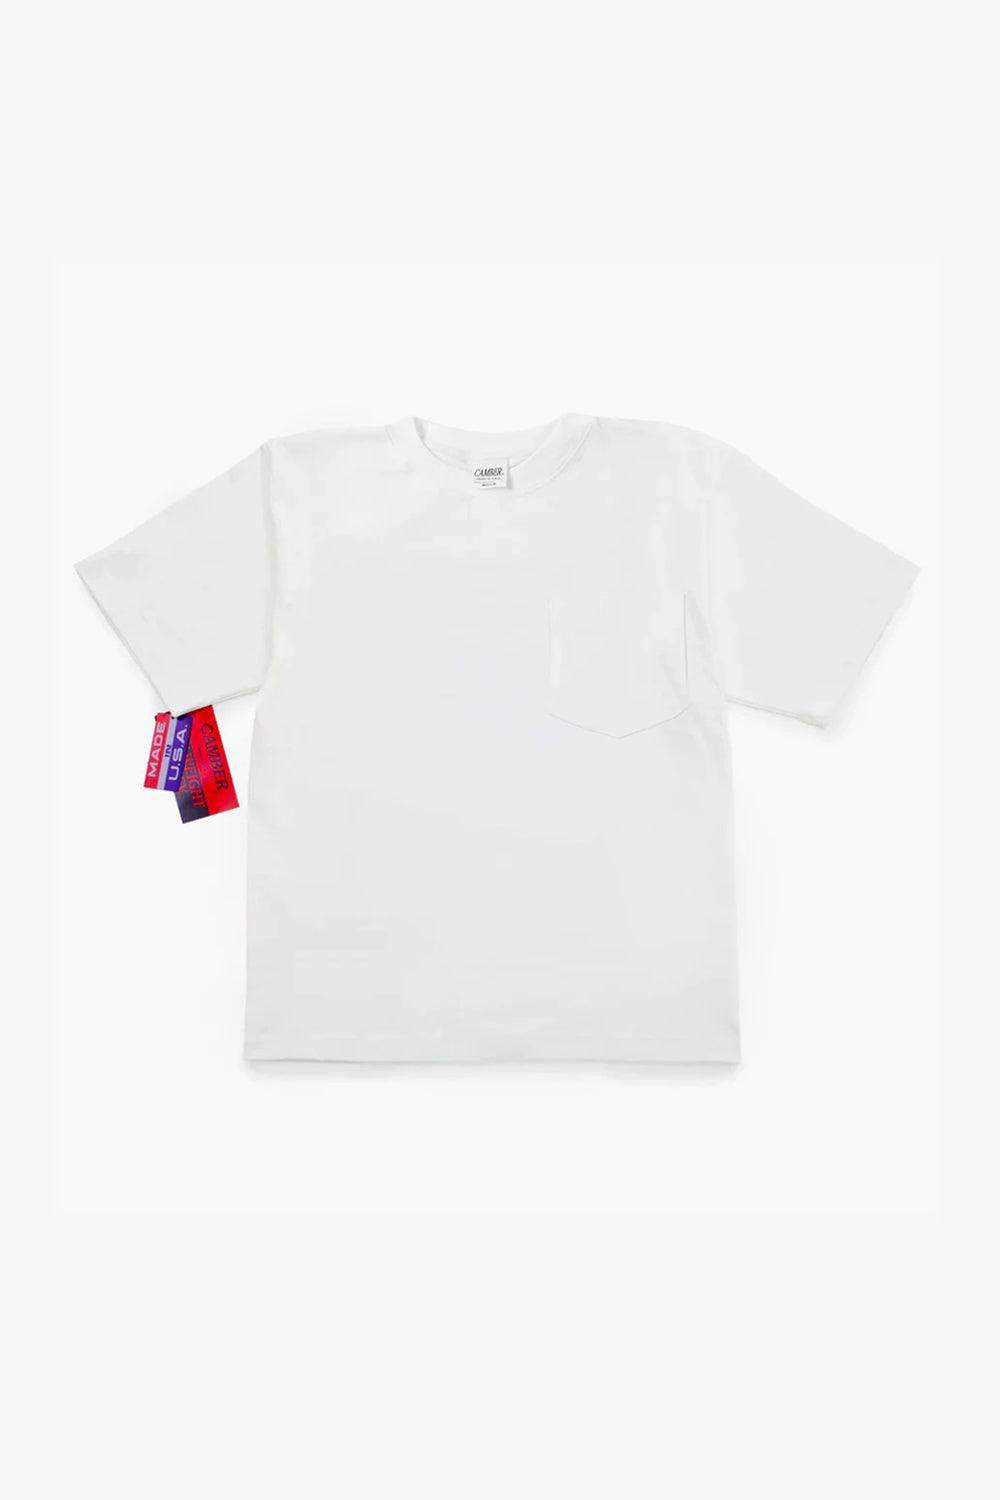 Camber USA : Pocket T-shirt : Red